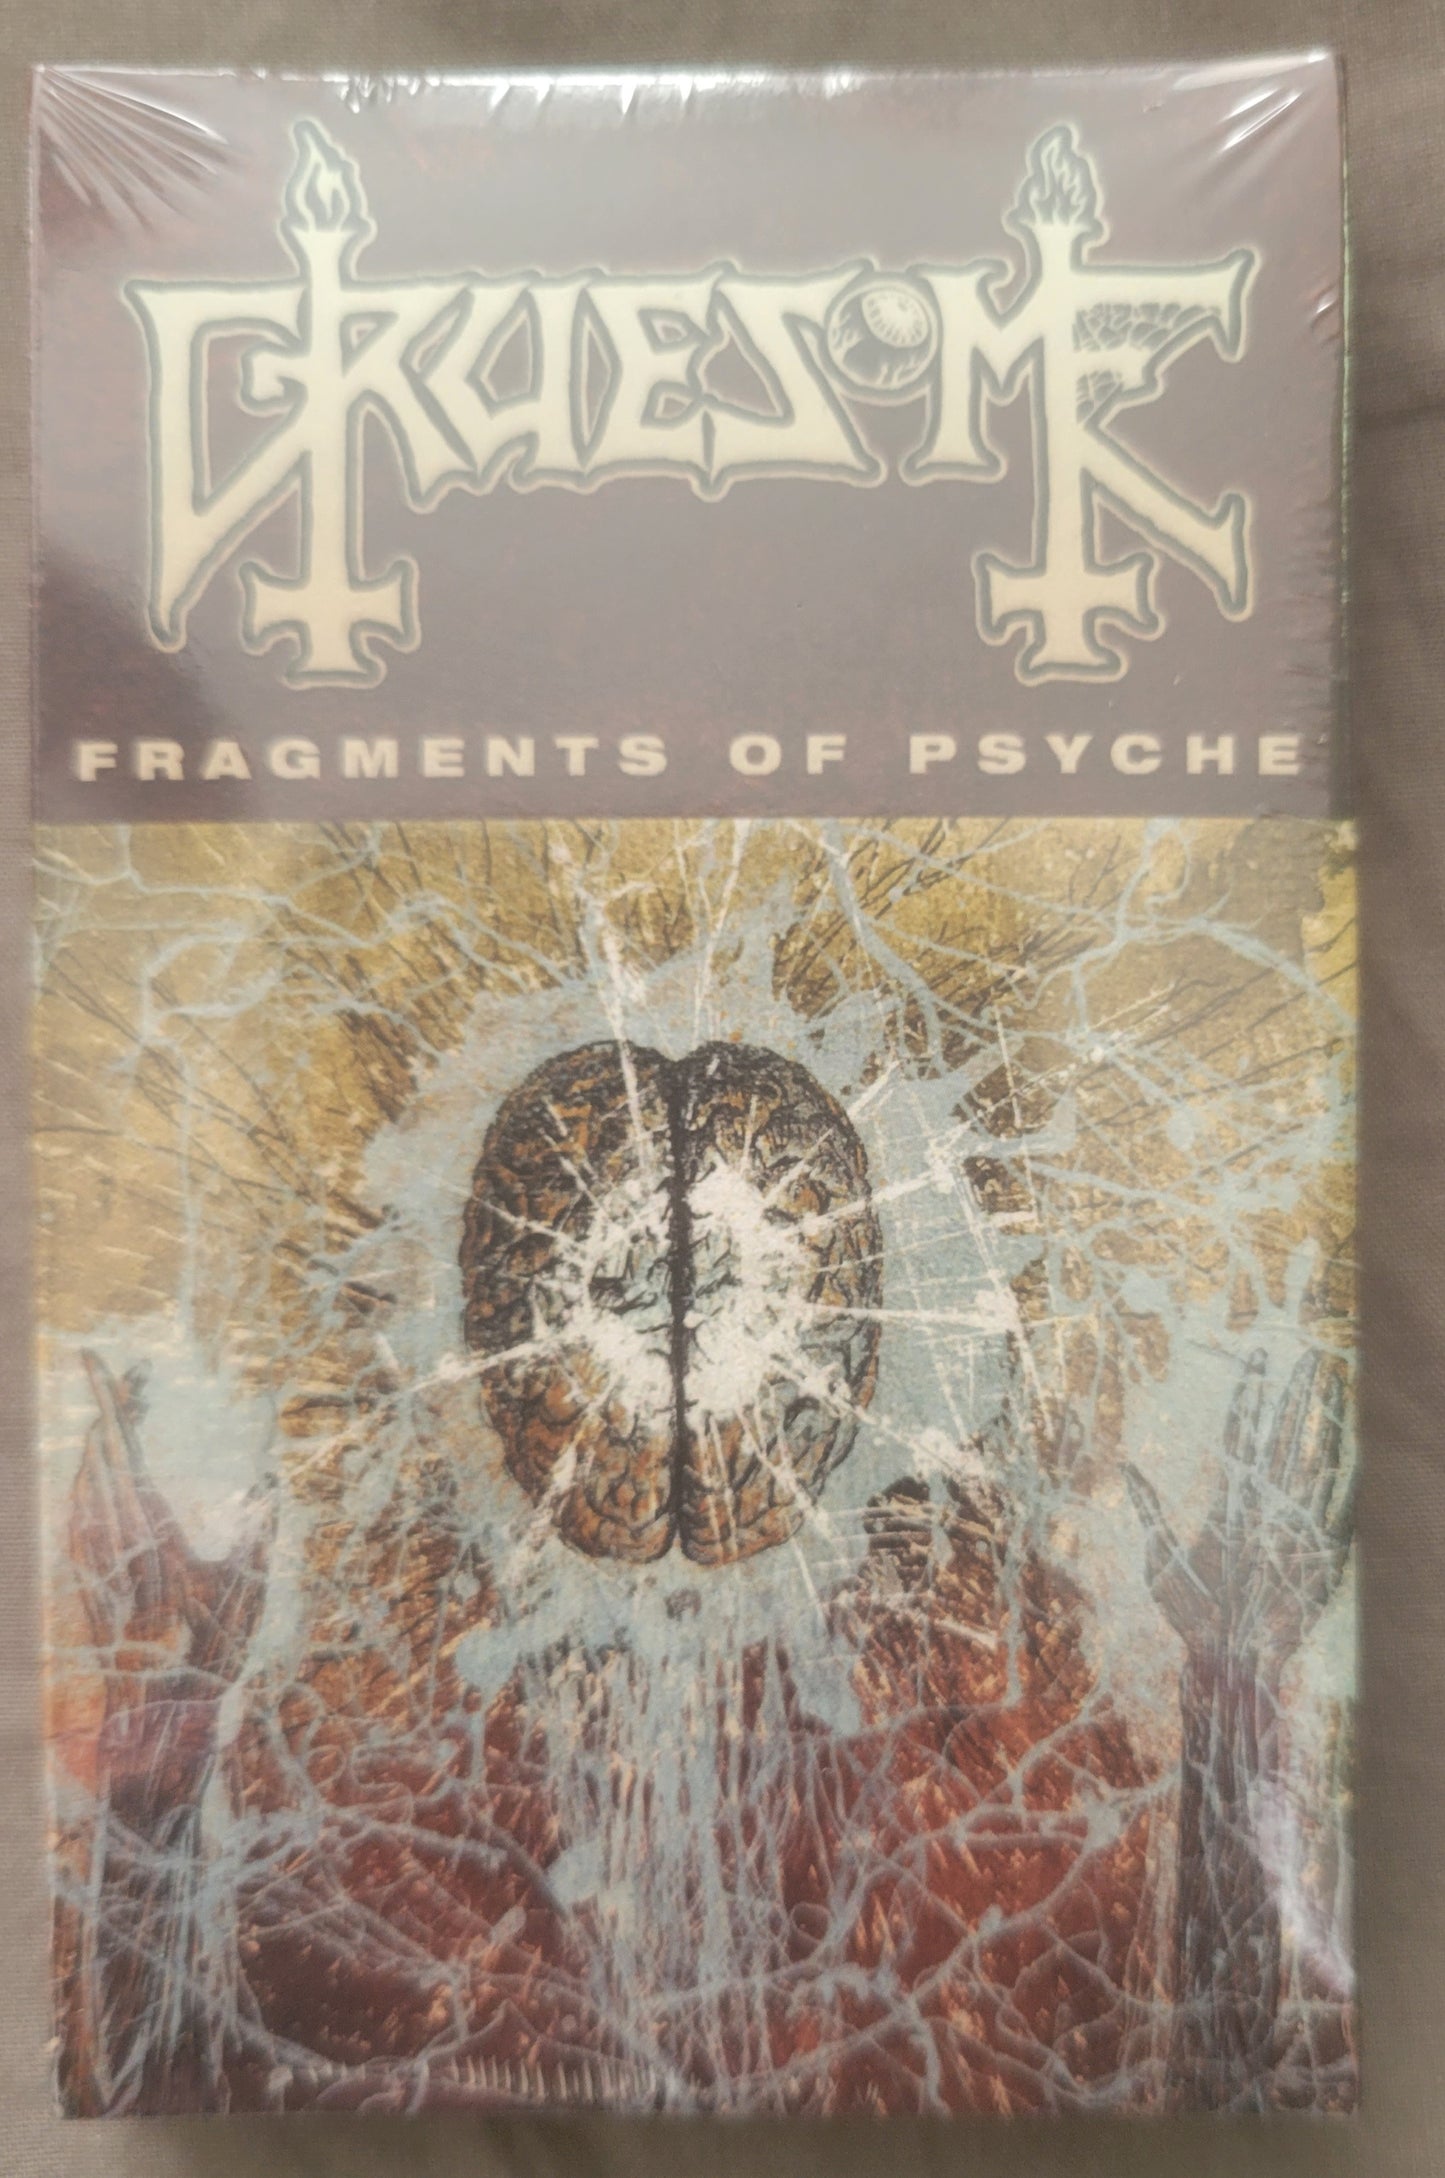 GRUESOME "Fragments of Psyche" Cassette single